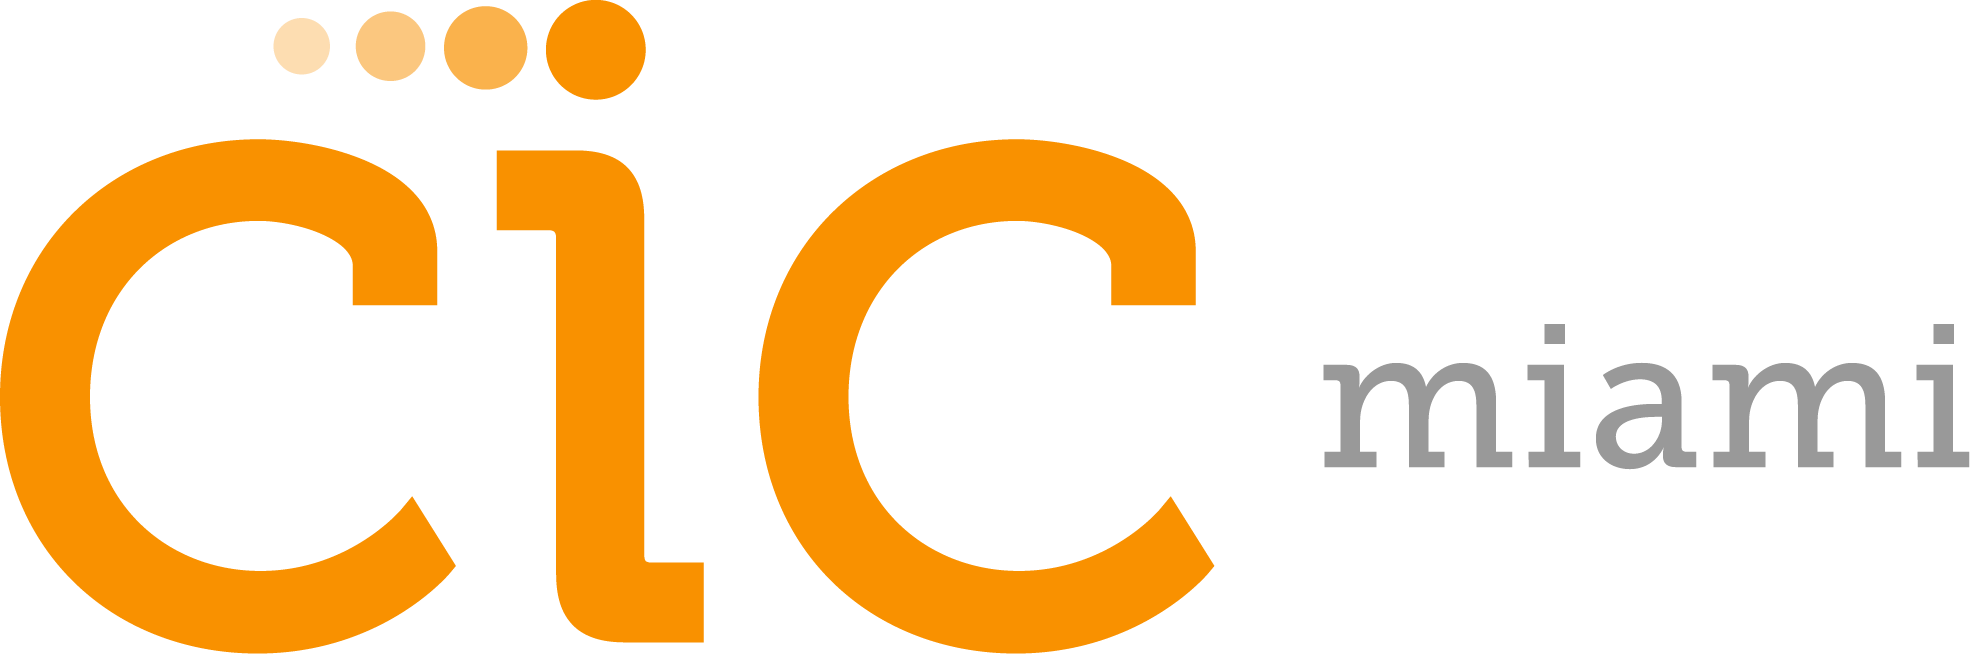 cic miami logo (1).png